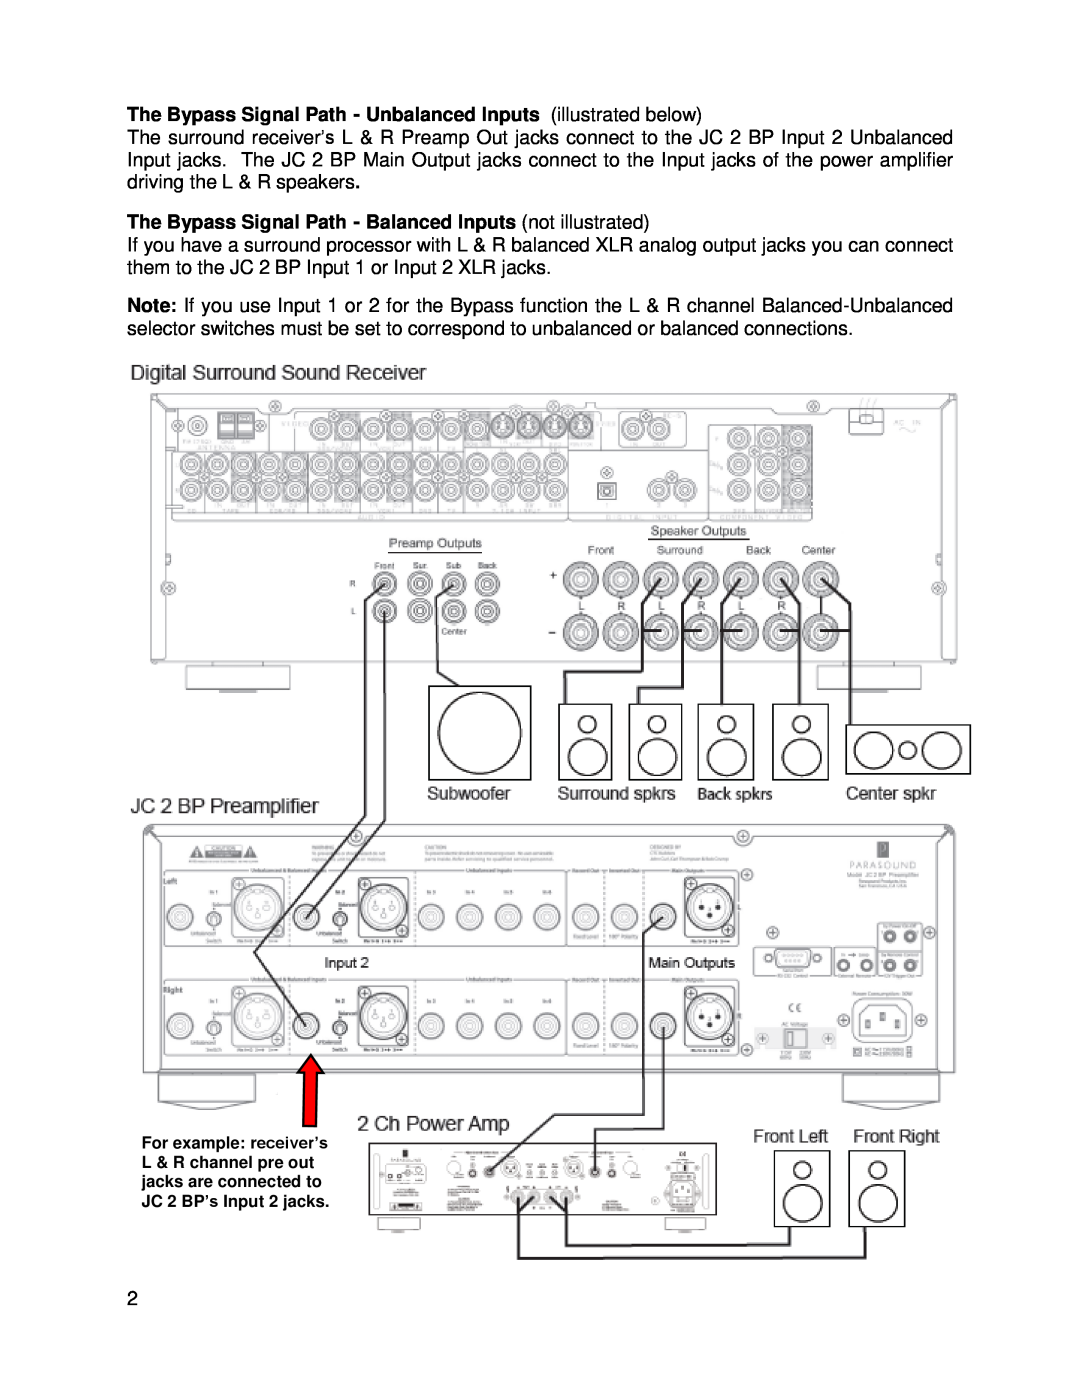 Parasound JC 2 BP manual The Bypass Signal Path - Unbalanced Inputs illustrated below 